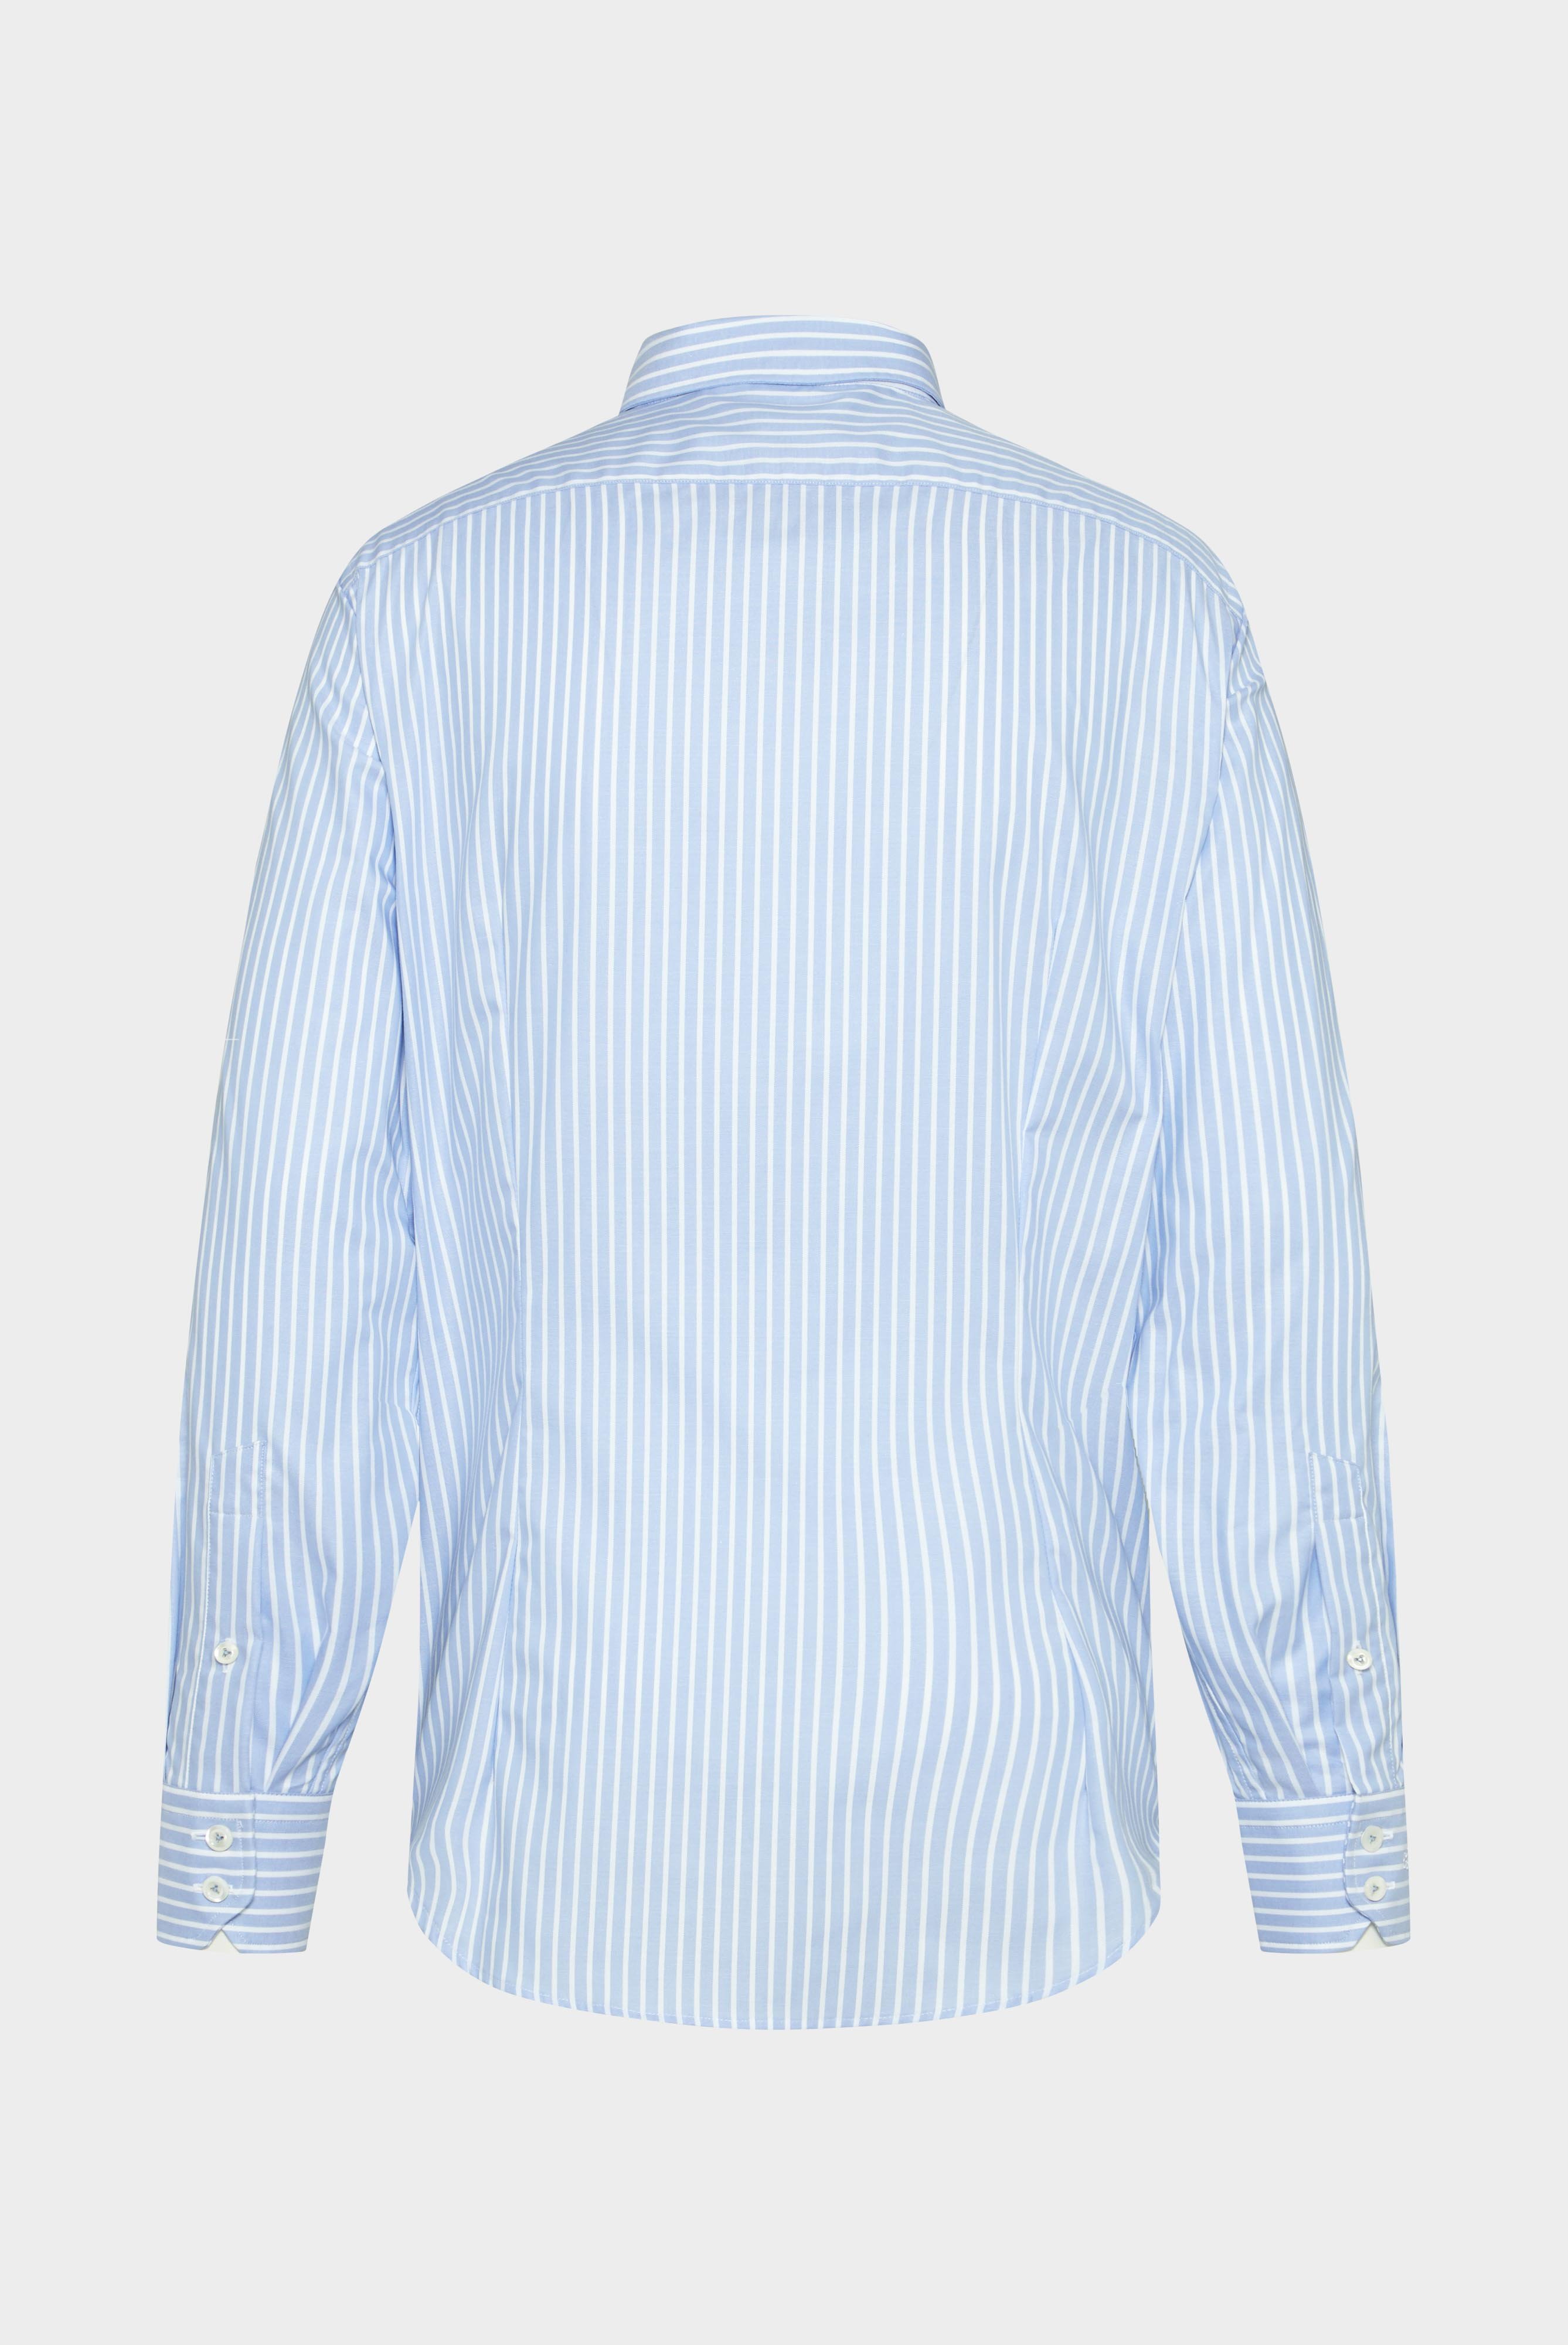 Easy Iron Shirts+Wrinkle-Free Shirt made of Organic Cotton+20.3281.NV.166009.730.39